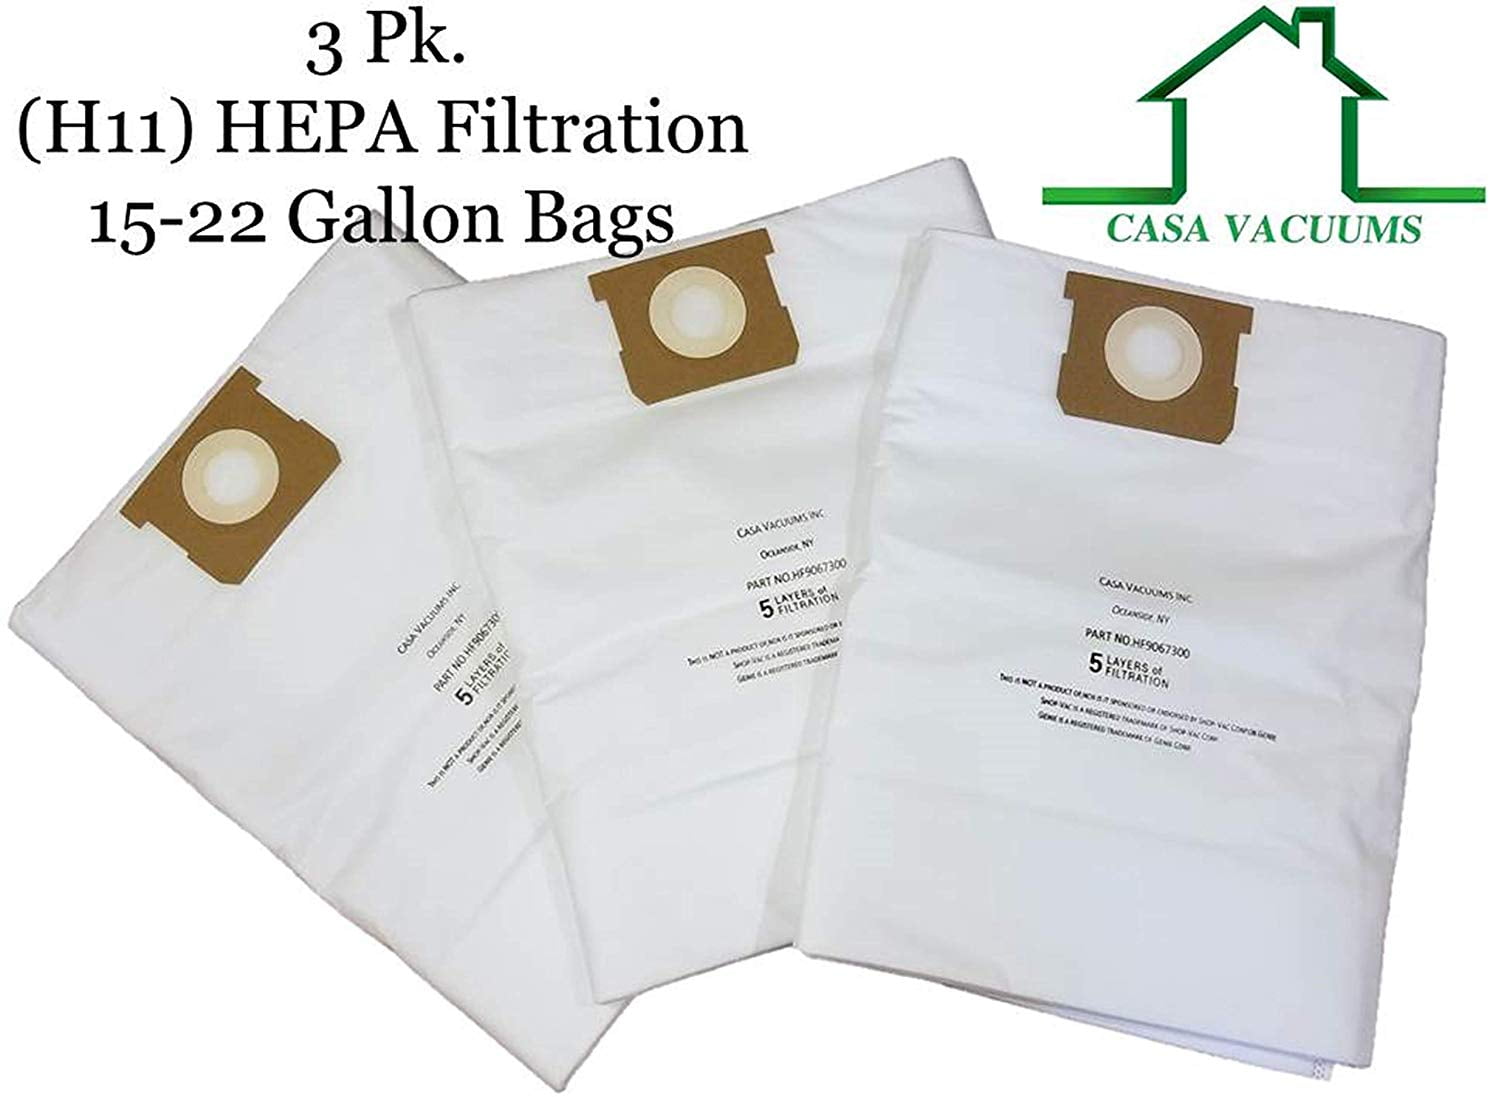 Shop Vac 15-22 Gallon Vacuum Cleaner Micro Filtration Paper Bags 2 Bags # 495